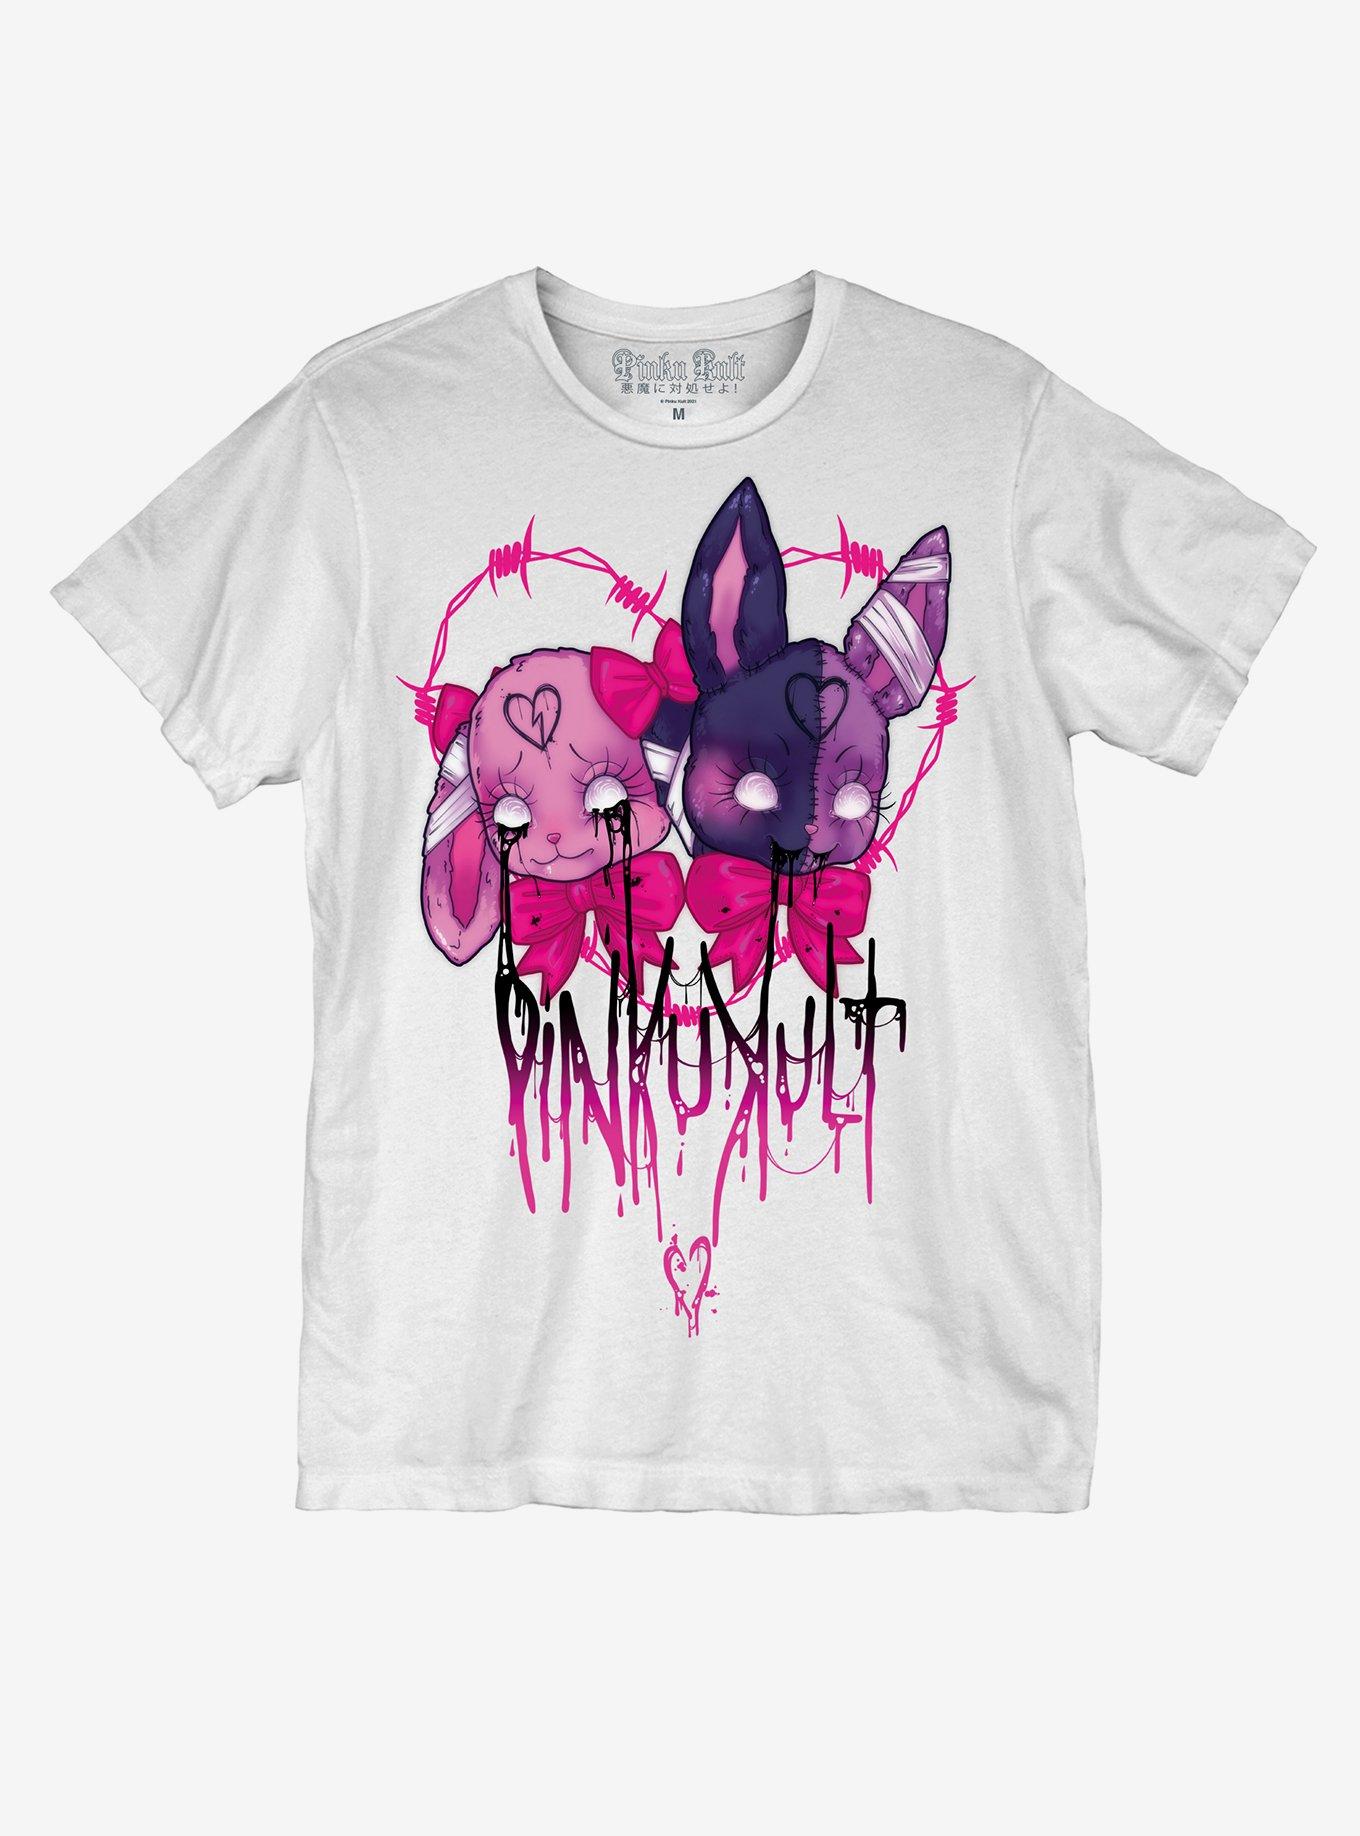 Doom & Gloom Boyfriend Fit Girls T-Shirt By Pinku Kult